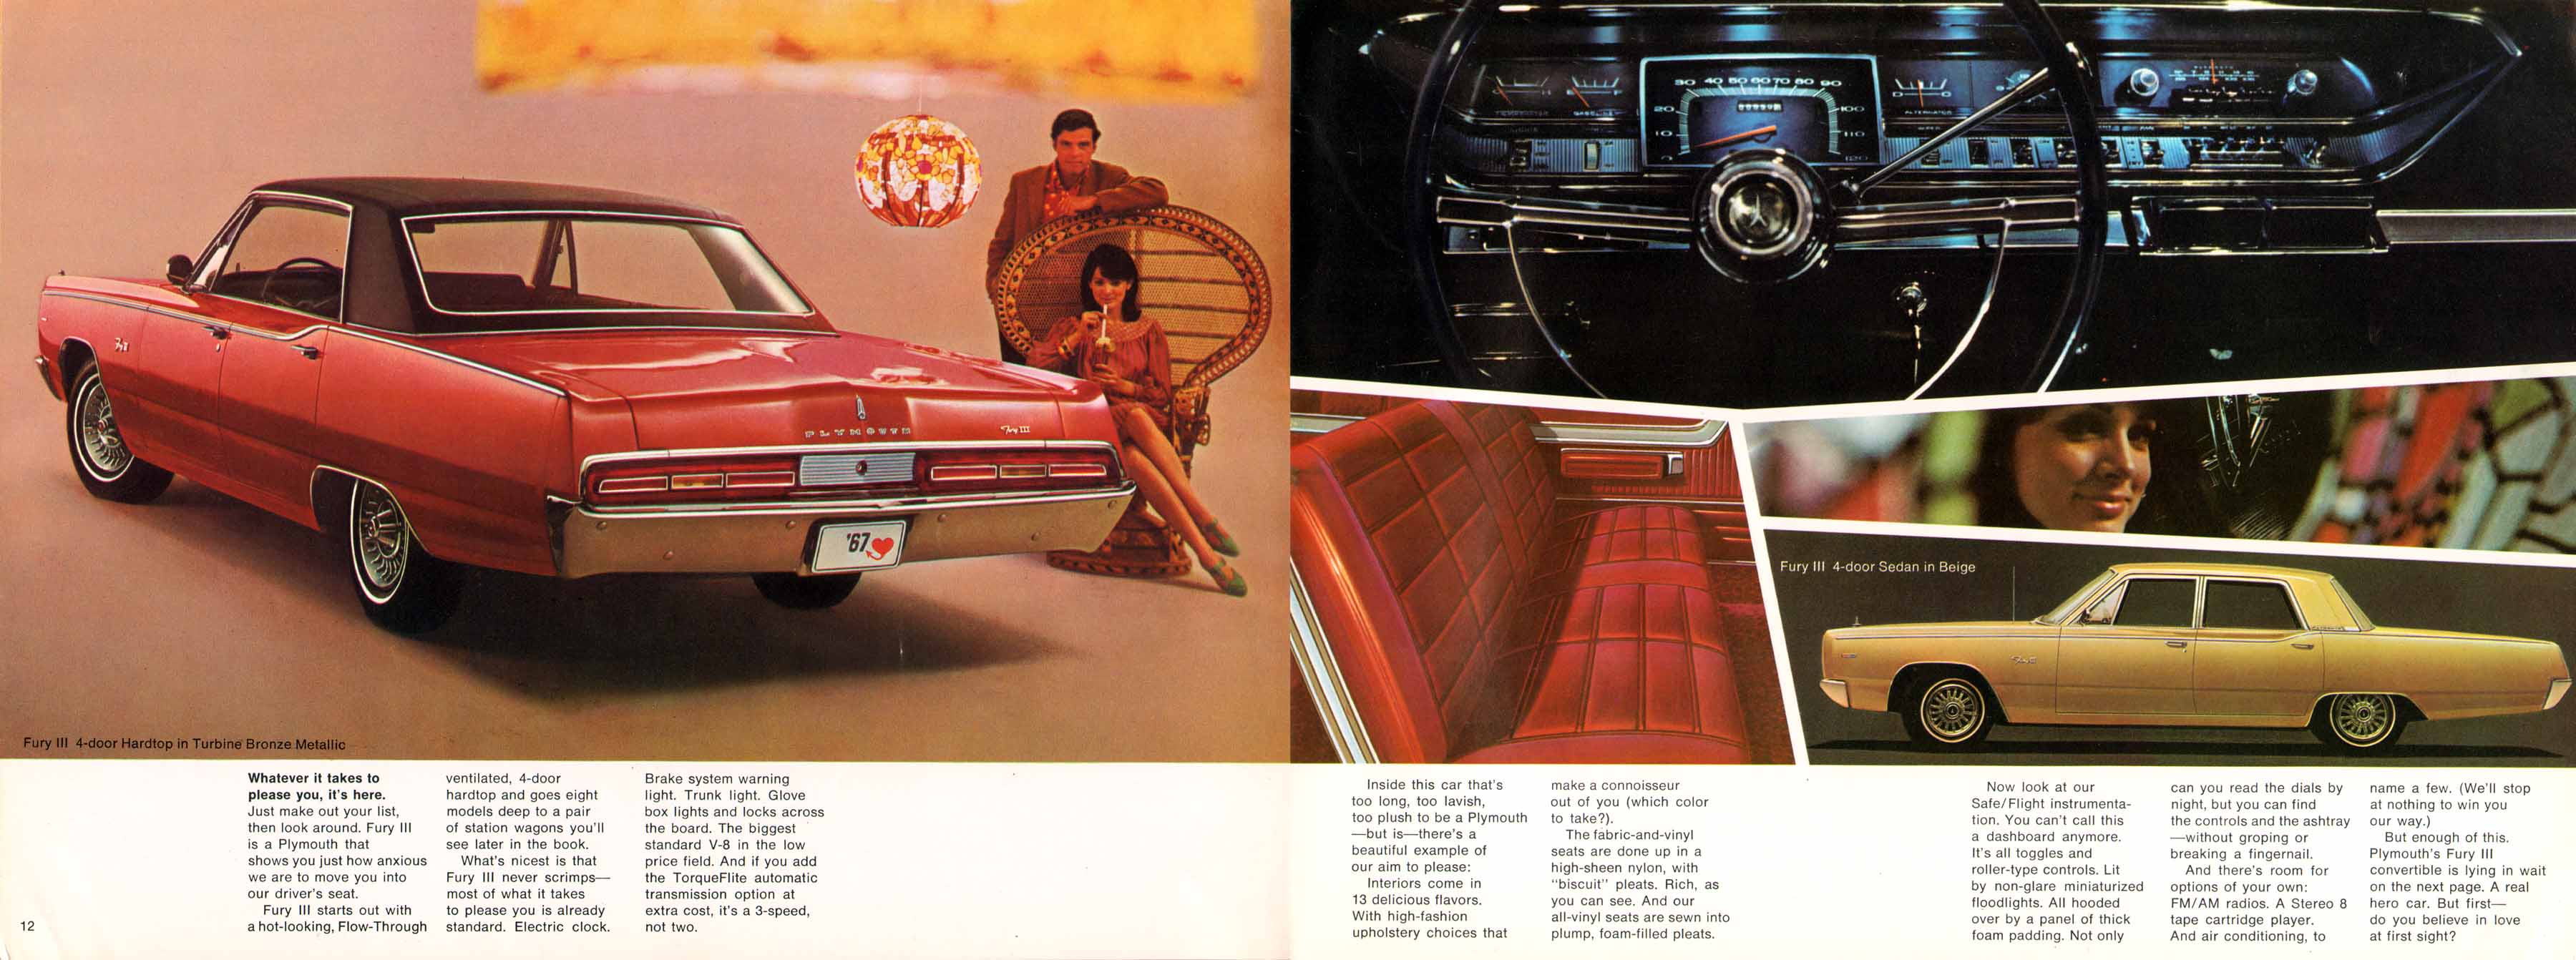 1967 Plymouth Fury-12-13